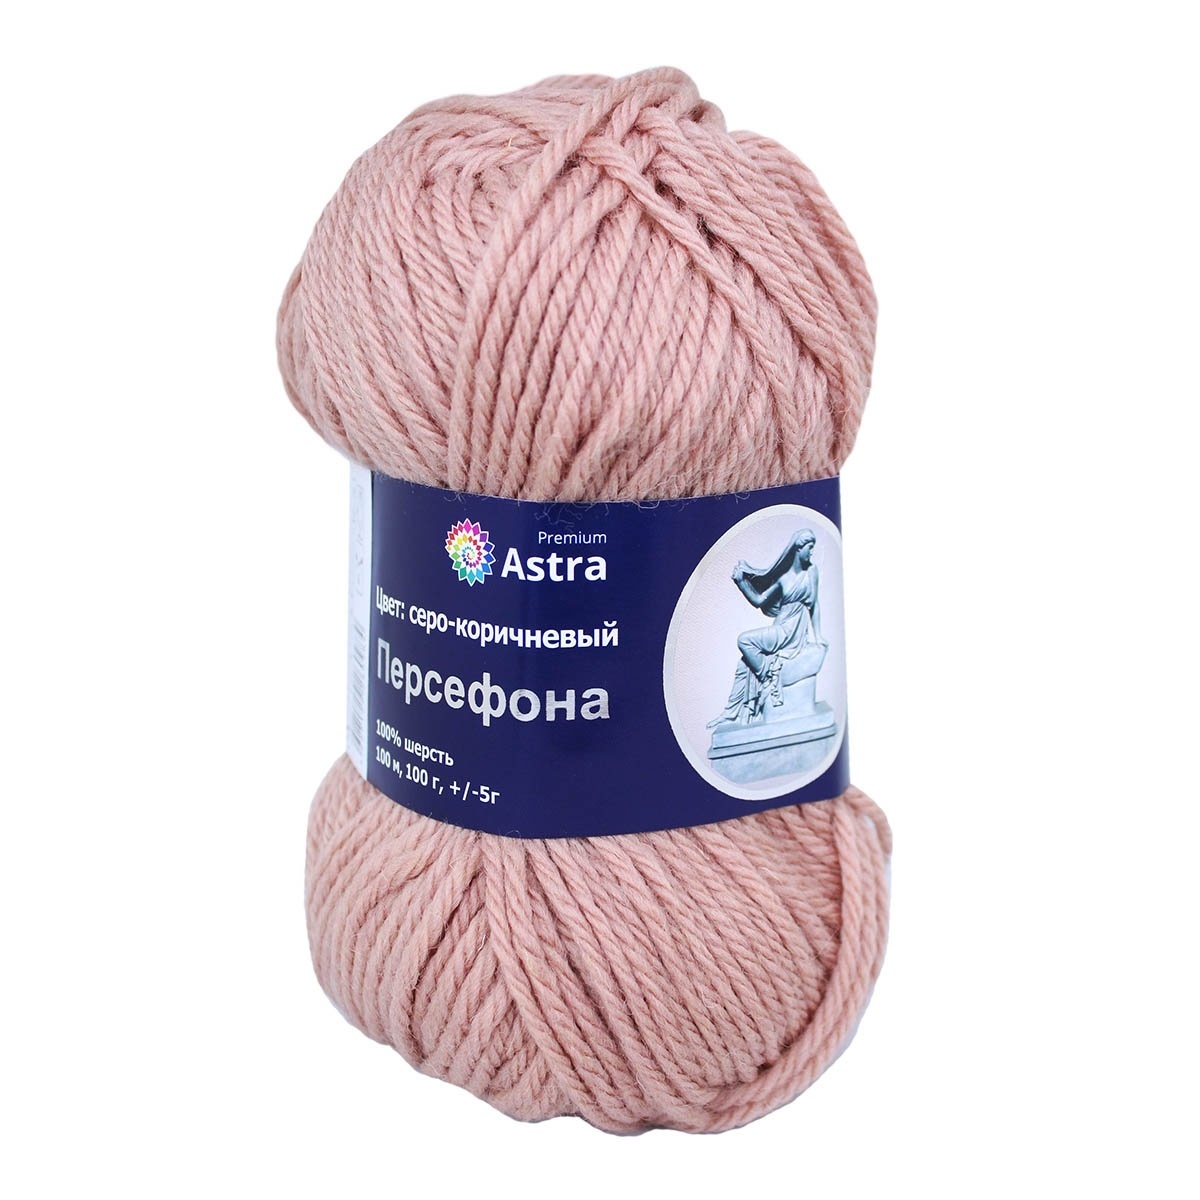 Astra Premium Persephone, 100% Wool, 3 Skein Value Pack, 300g фото 5